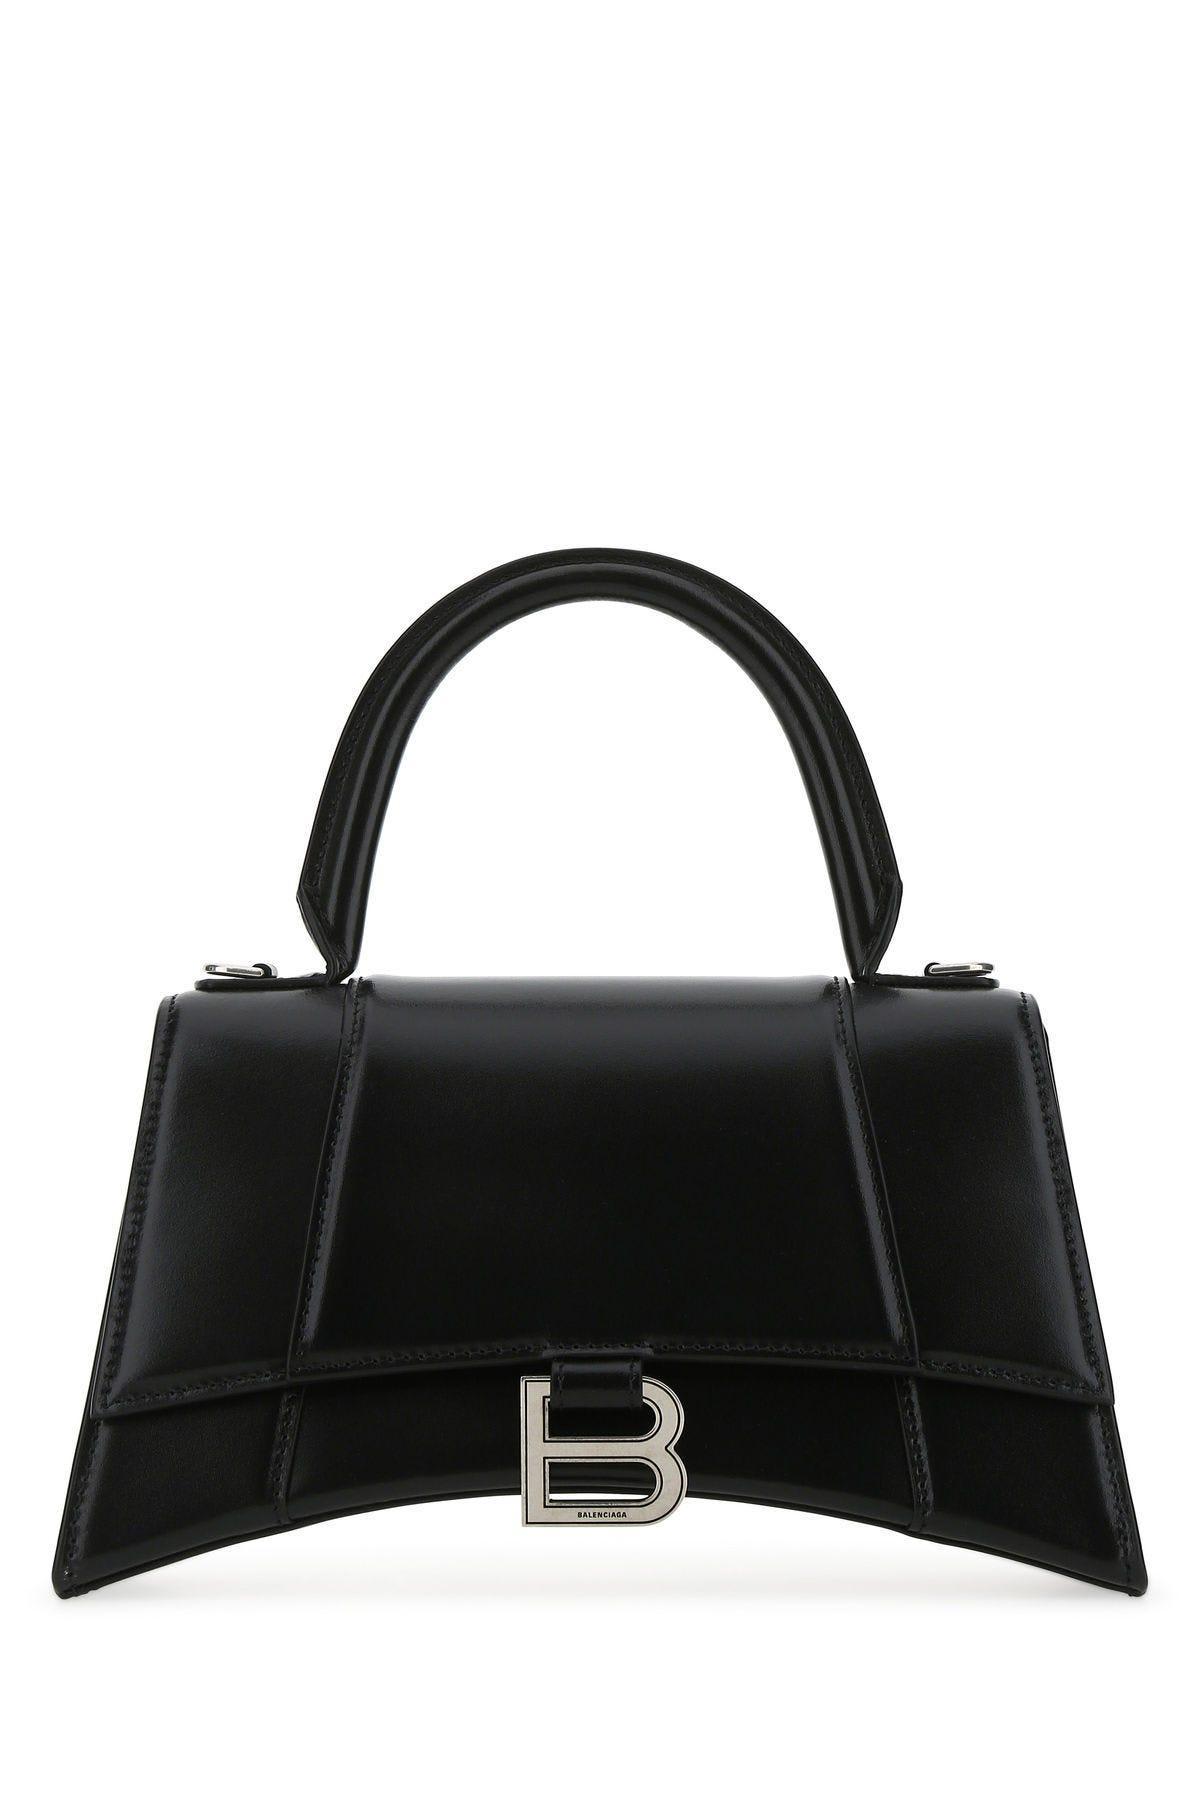 Balenciaga Black Leather Small Hourglass Handbag | Lyst